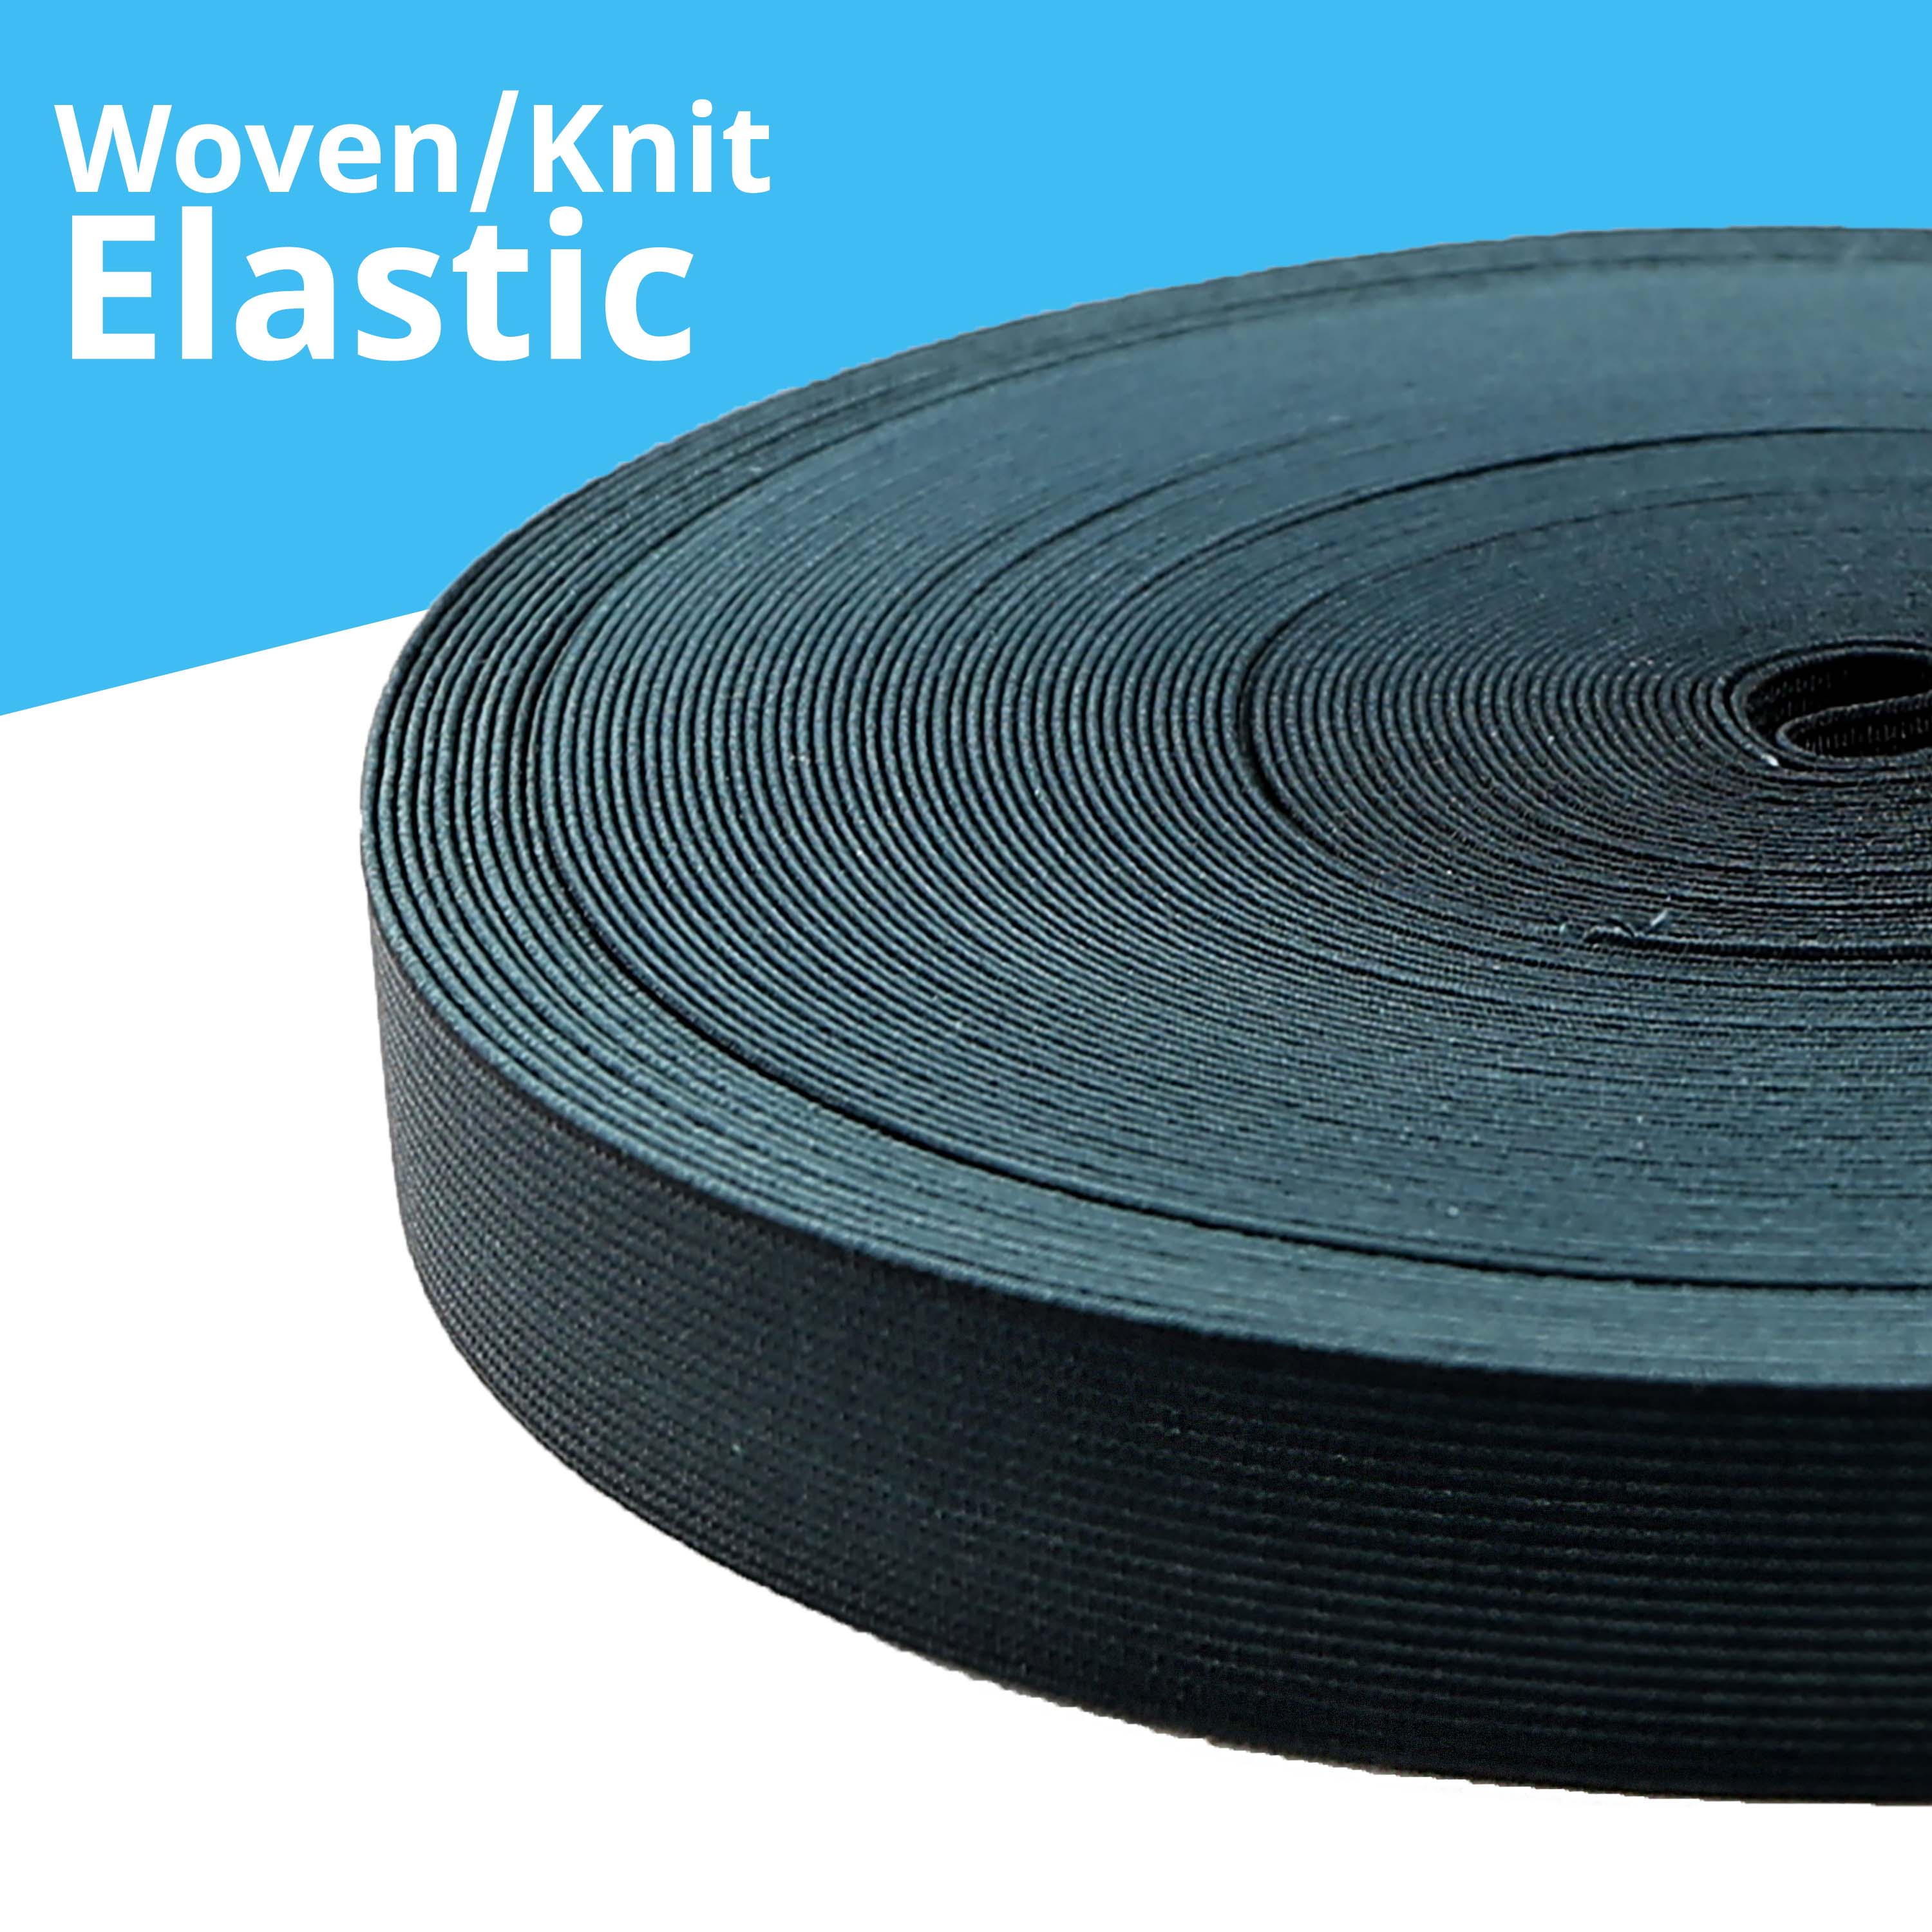 Woven/Knit Elastic